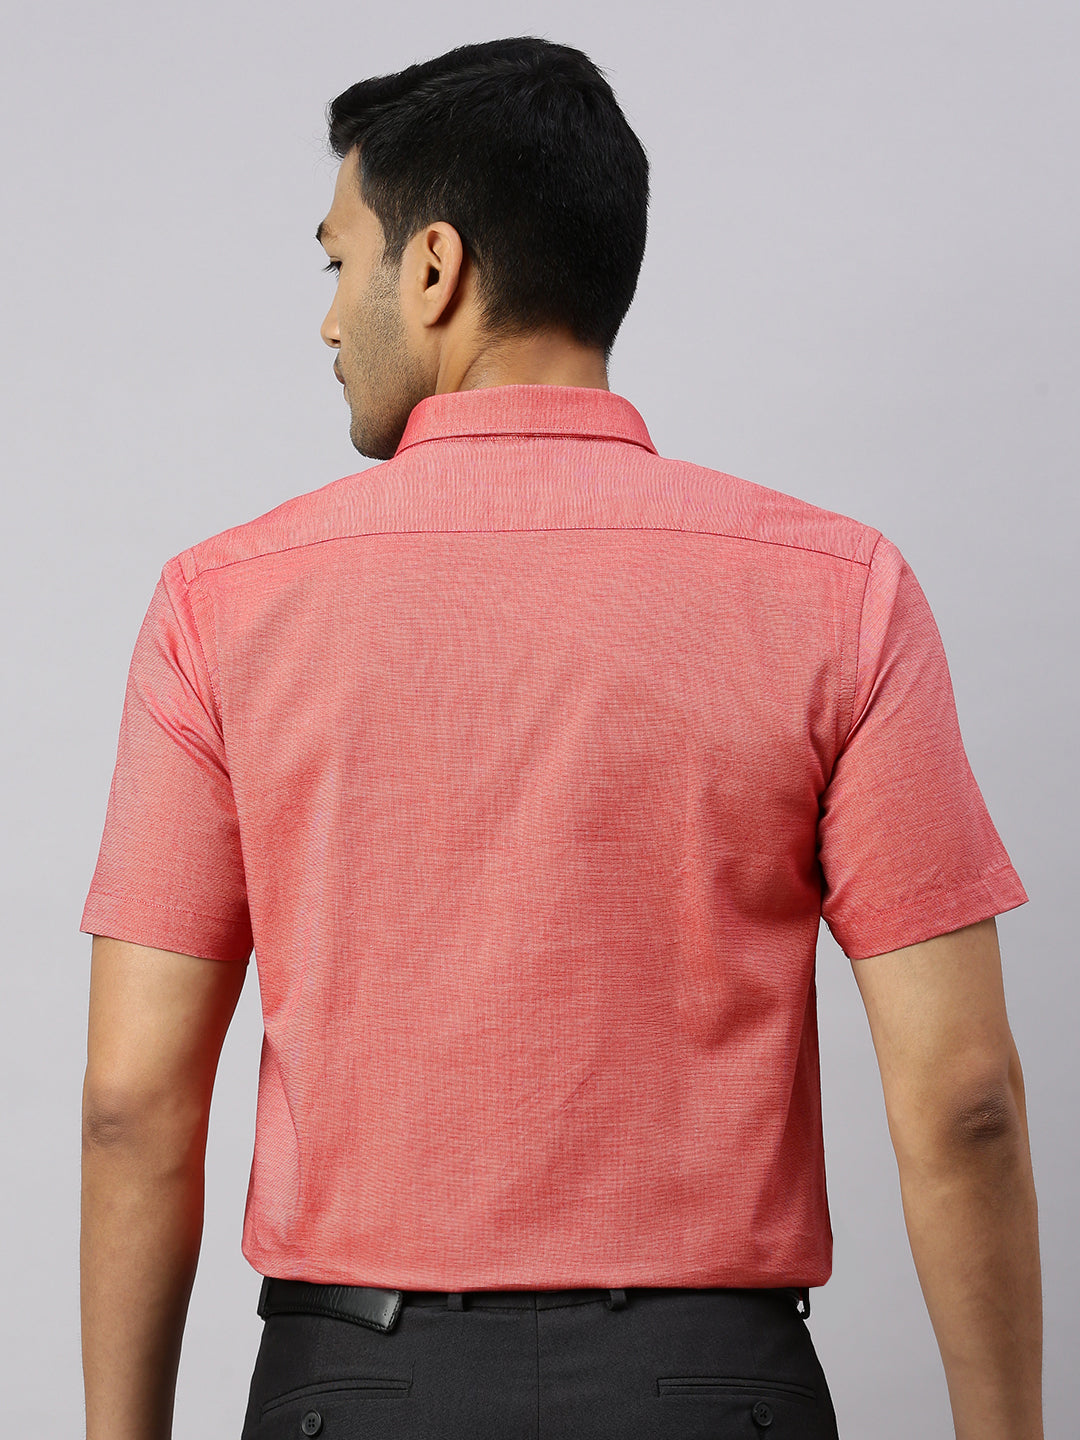 Mens Half Sleeve Smart Fit Pinkish Red Classic Shirt